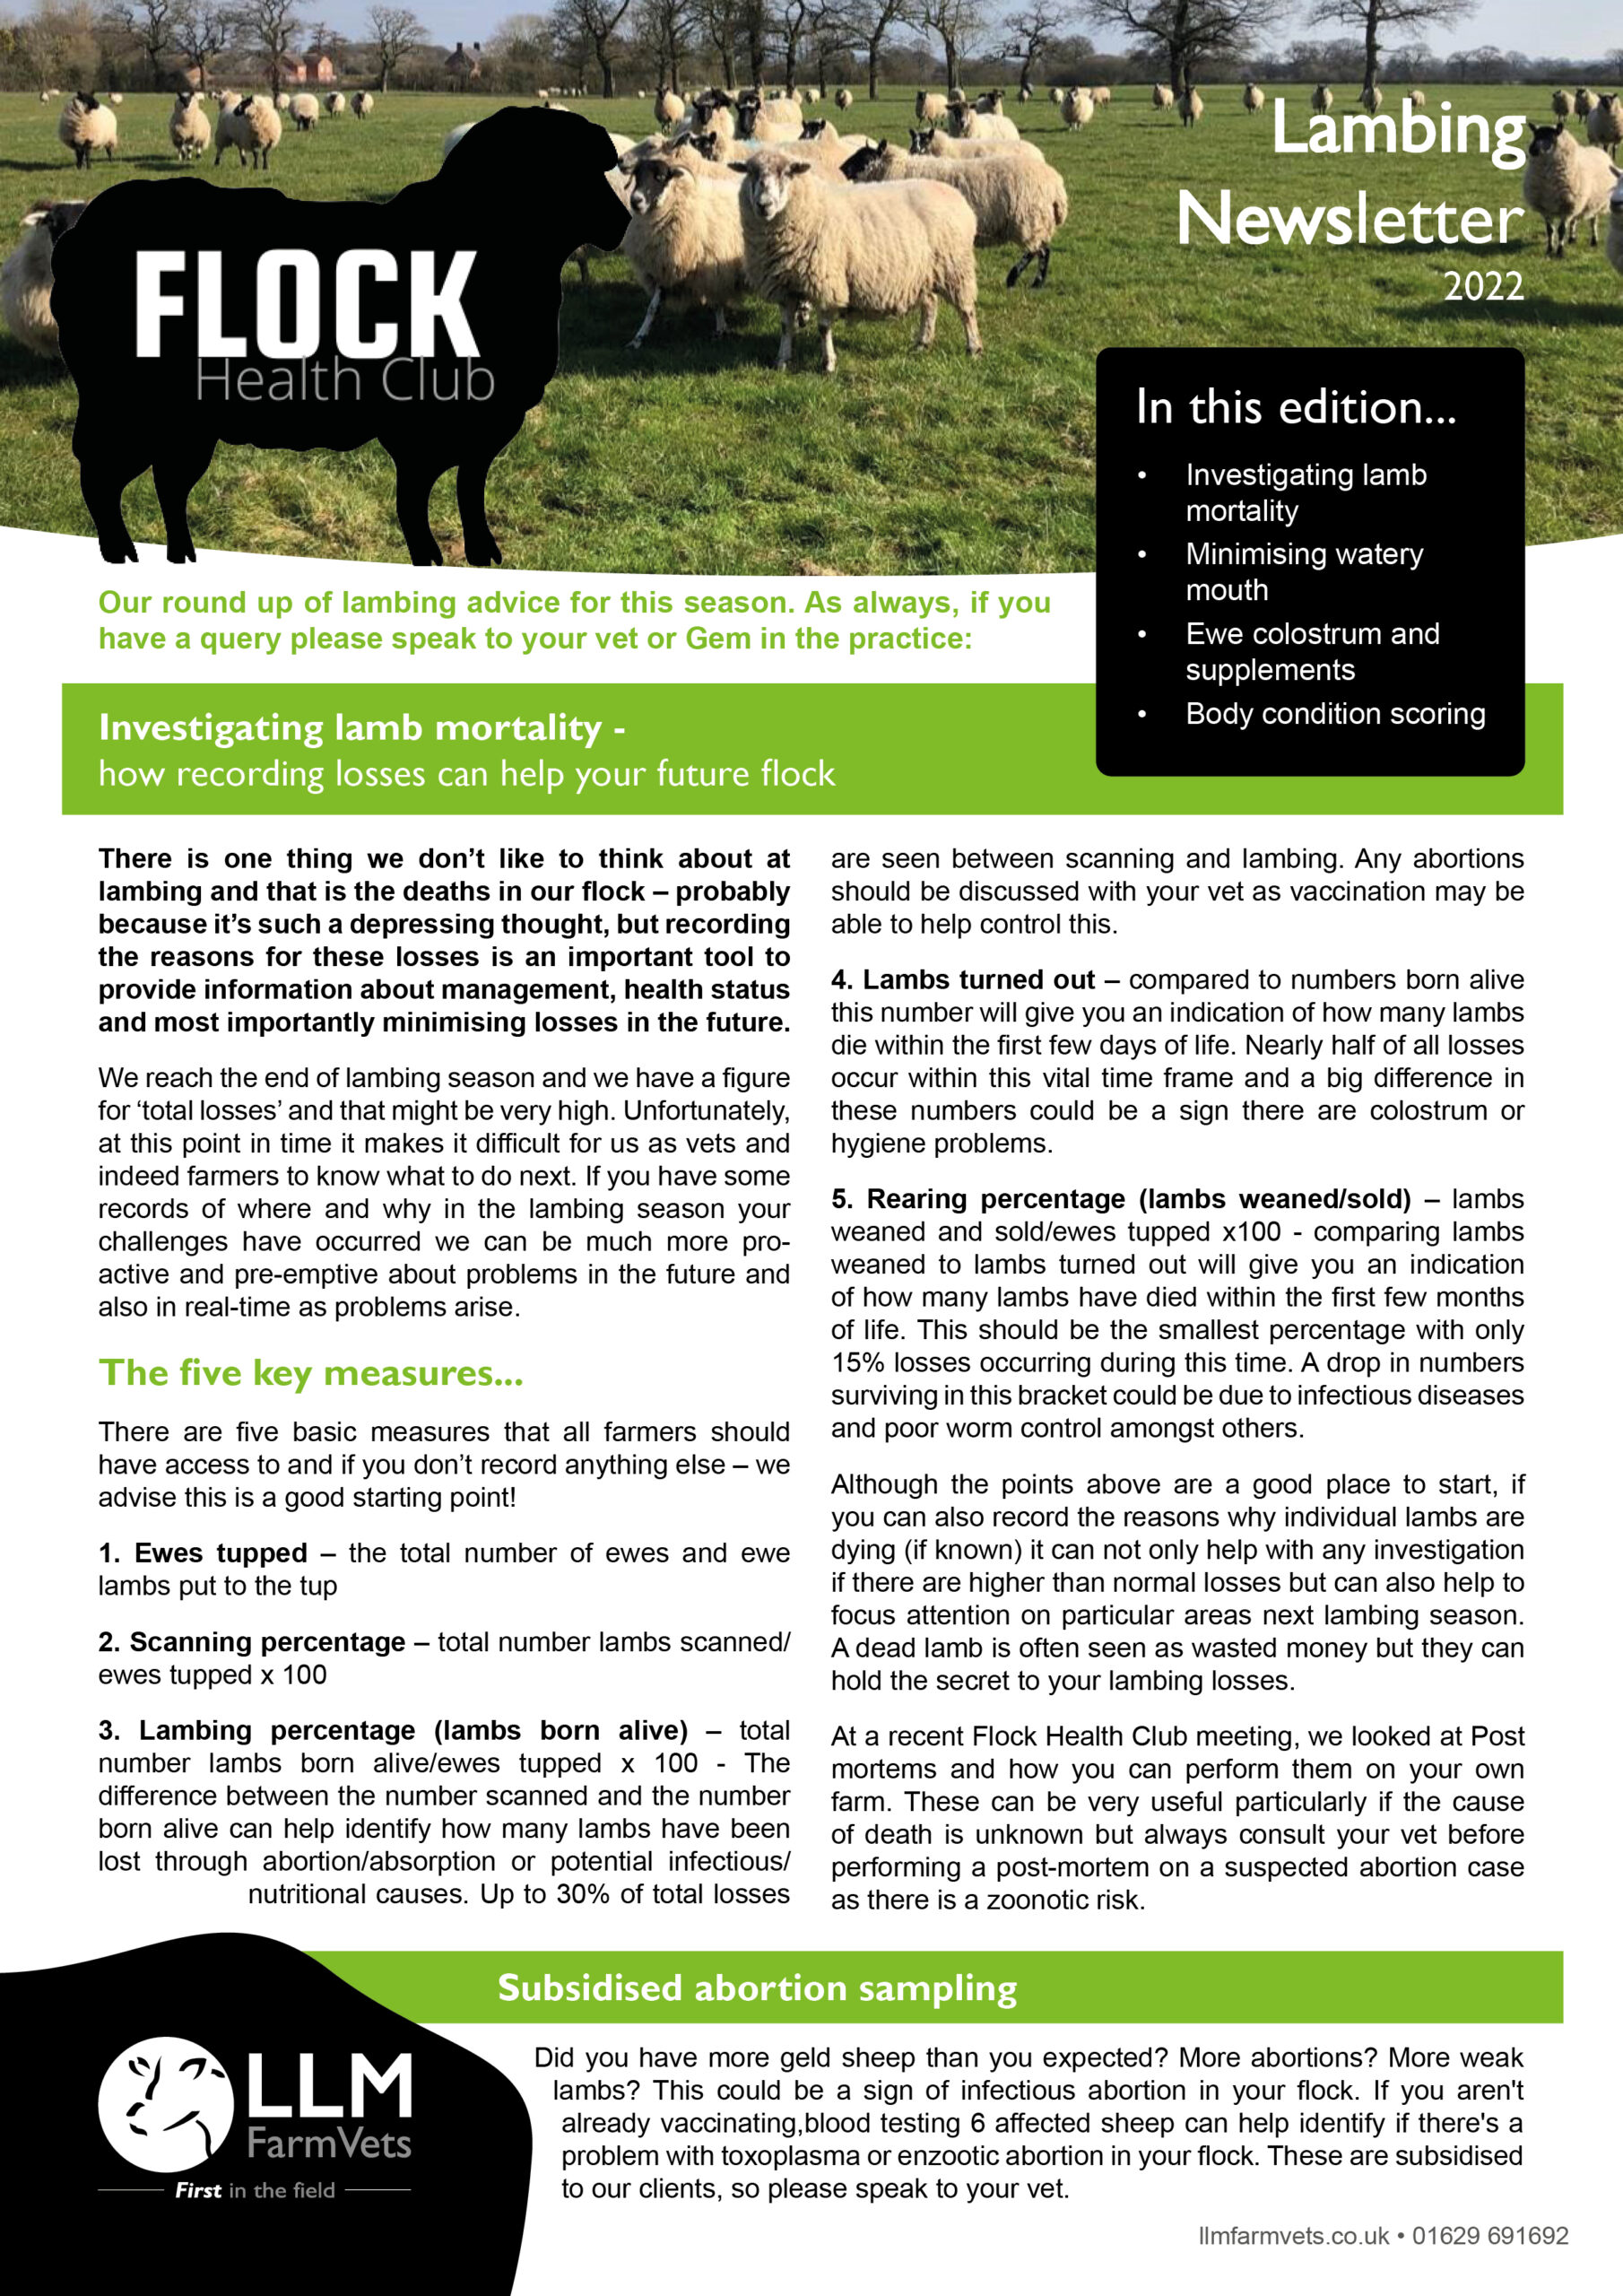 Derbyshire Lambing Newsletter 2022